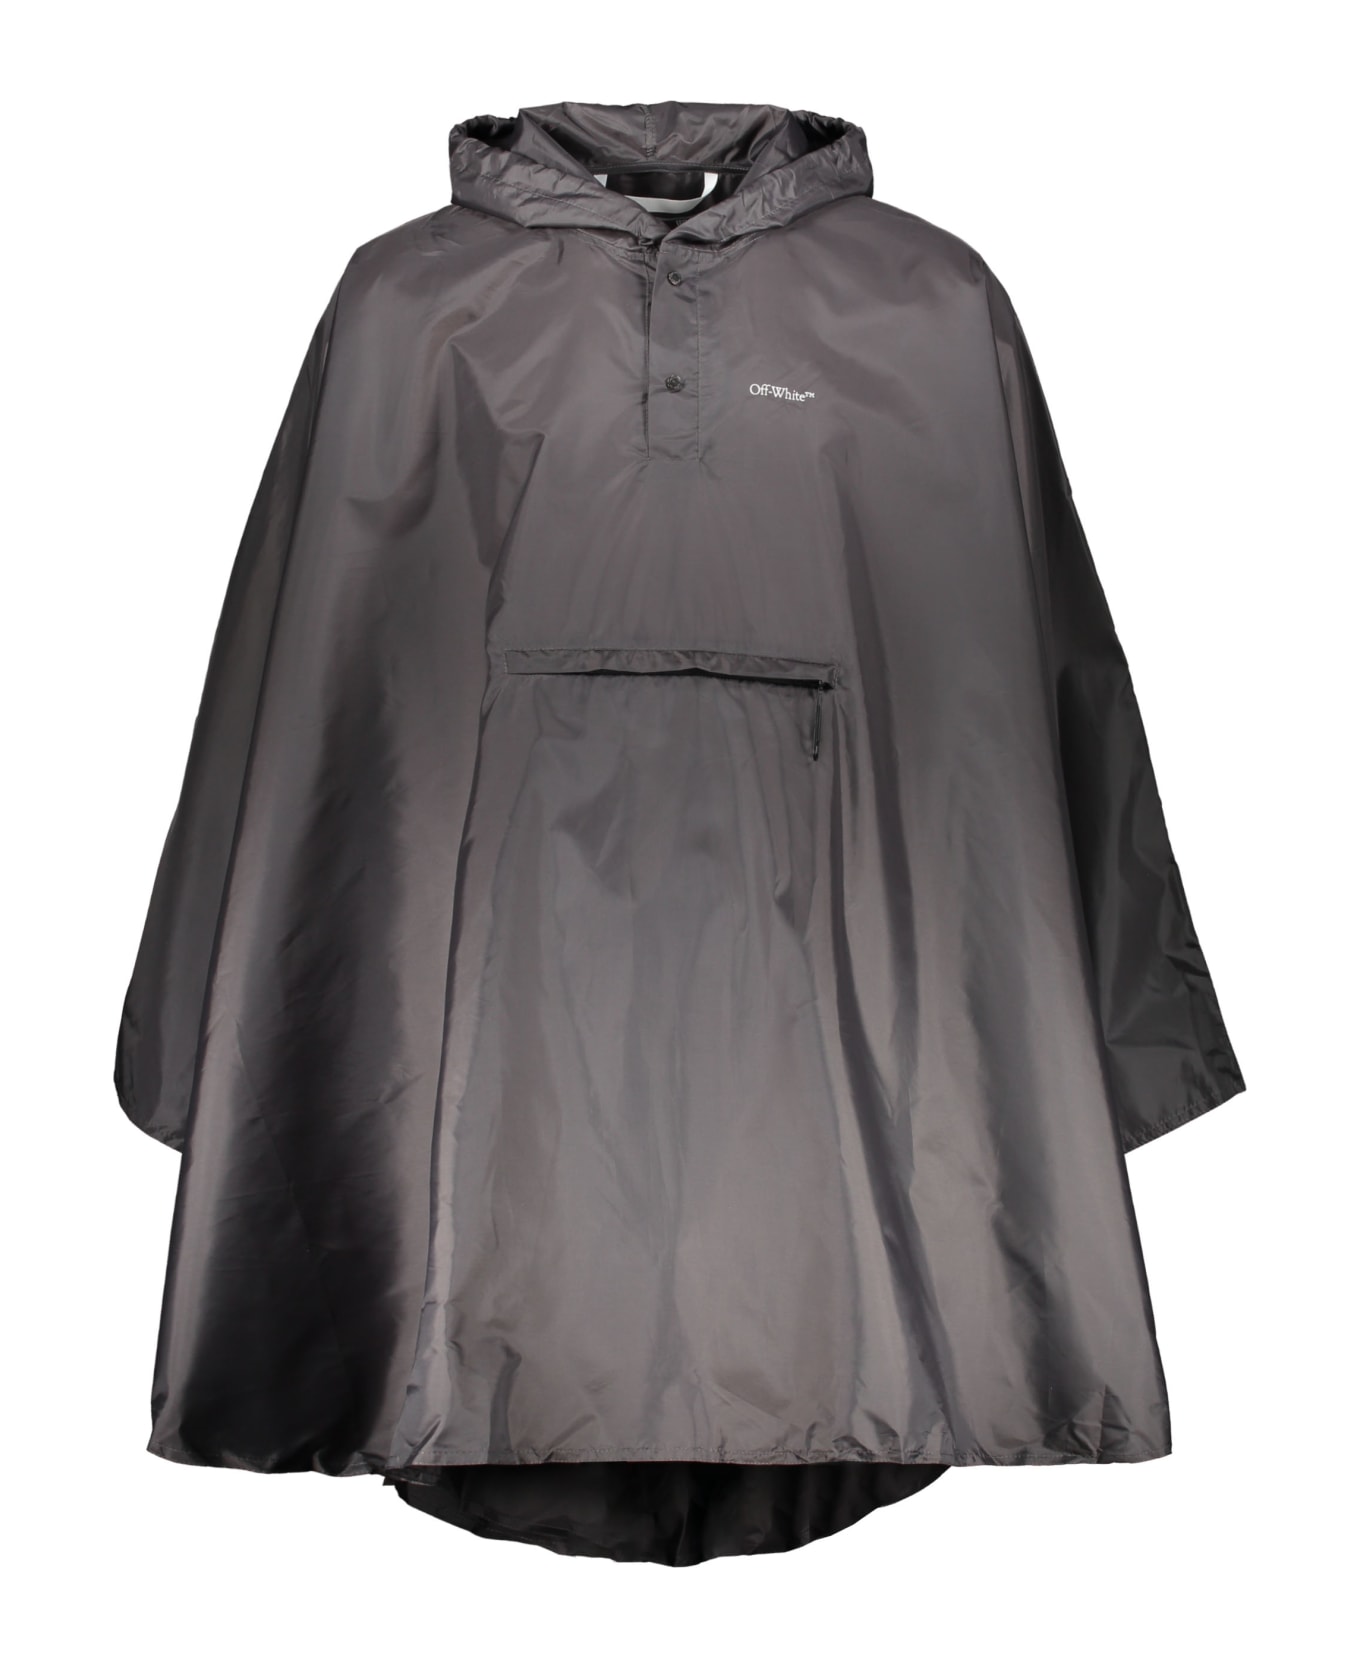 Off-White Techno Fabric Raincoat - grey レインコート